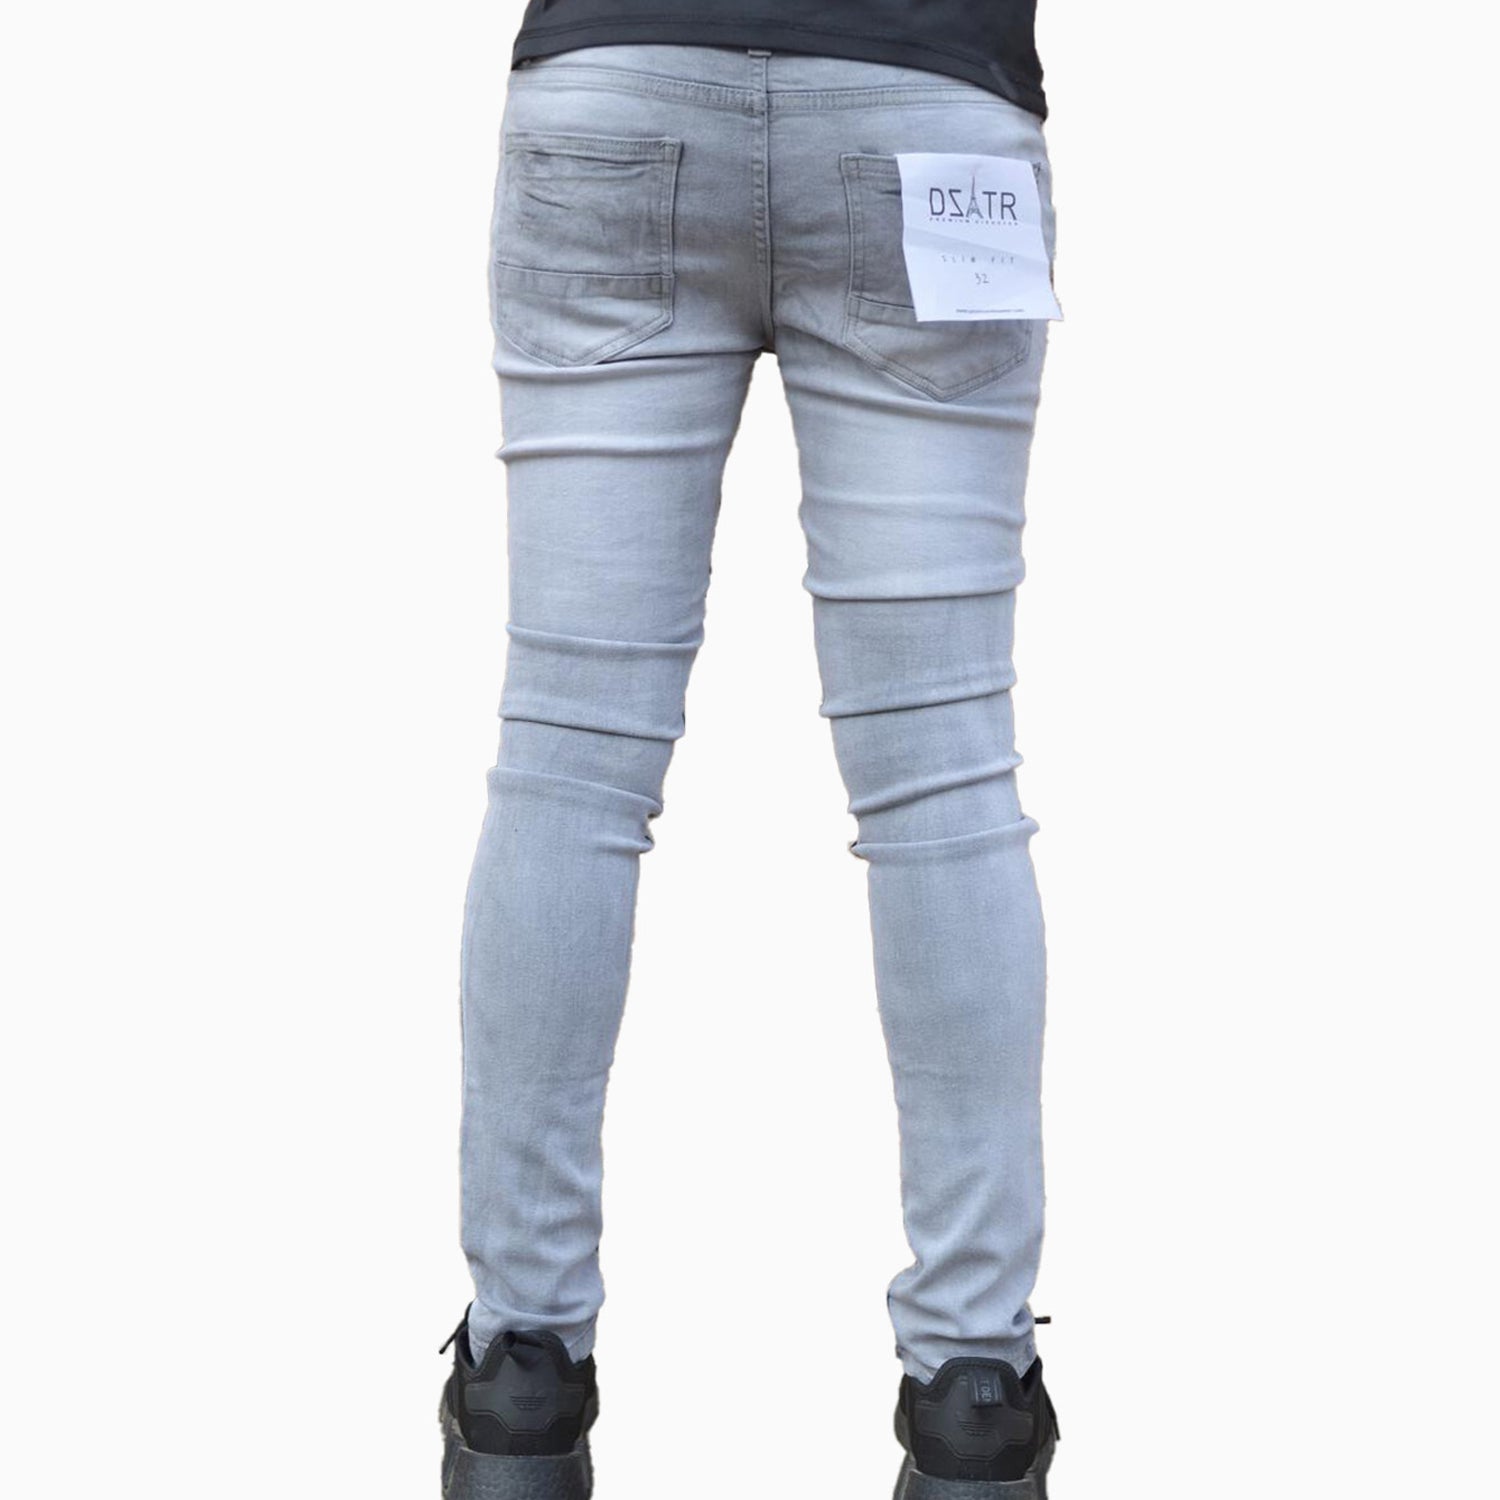 Men's Basic Grey Jean Denim Pant